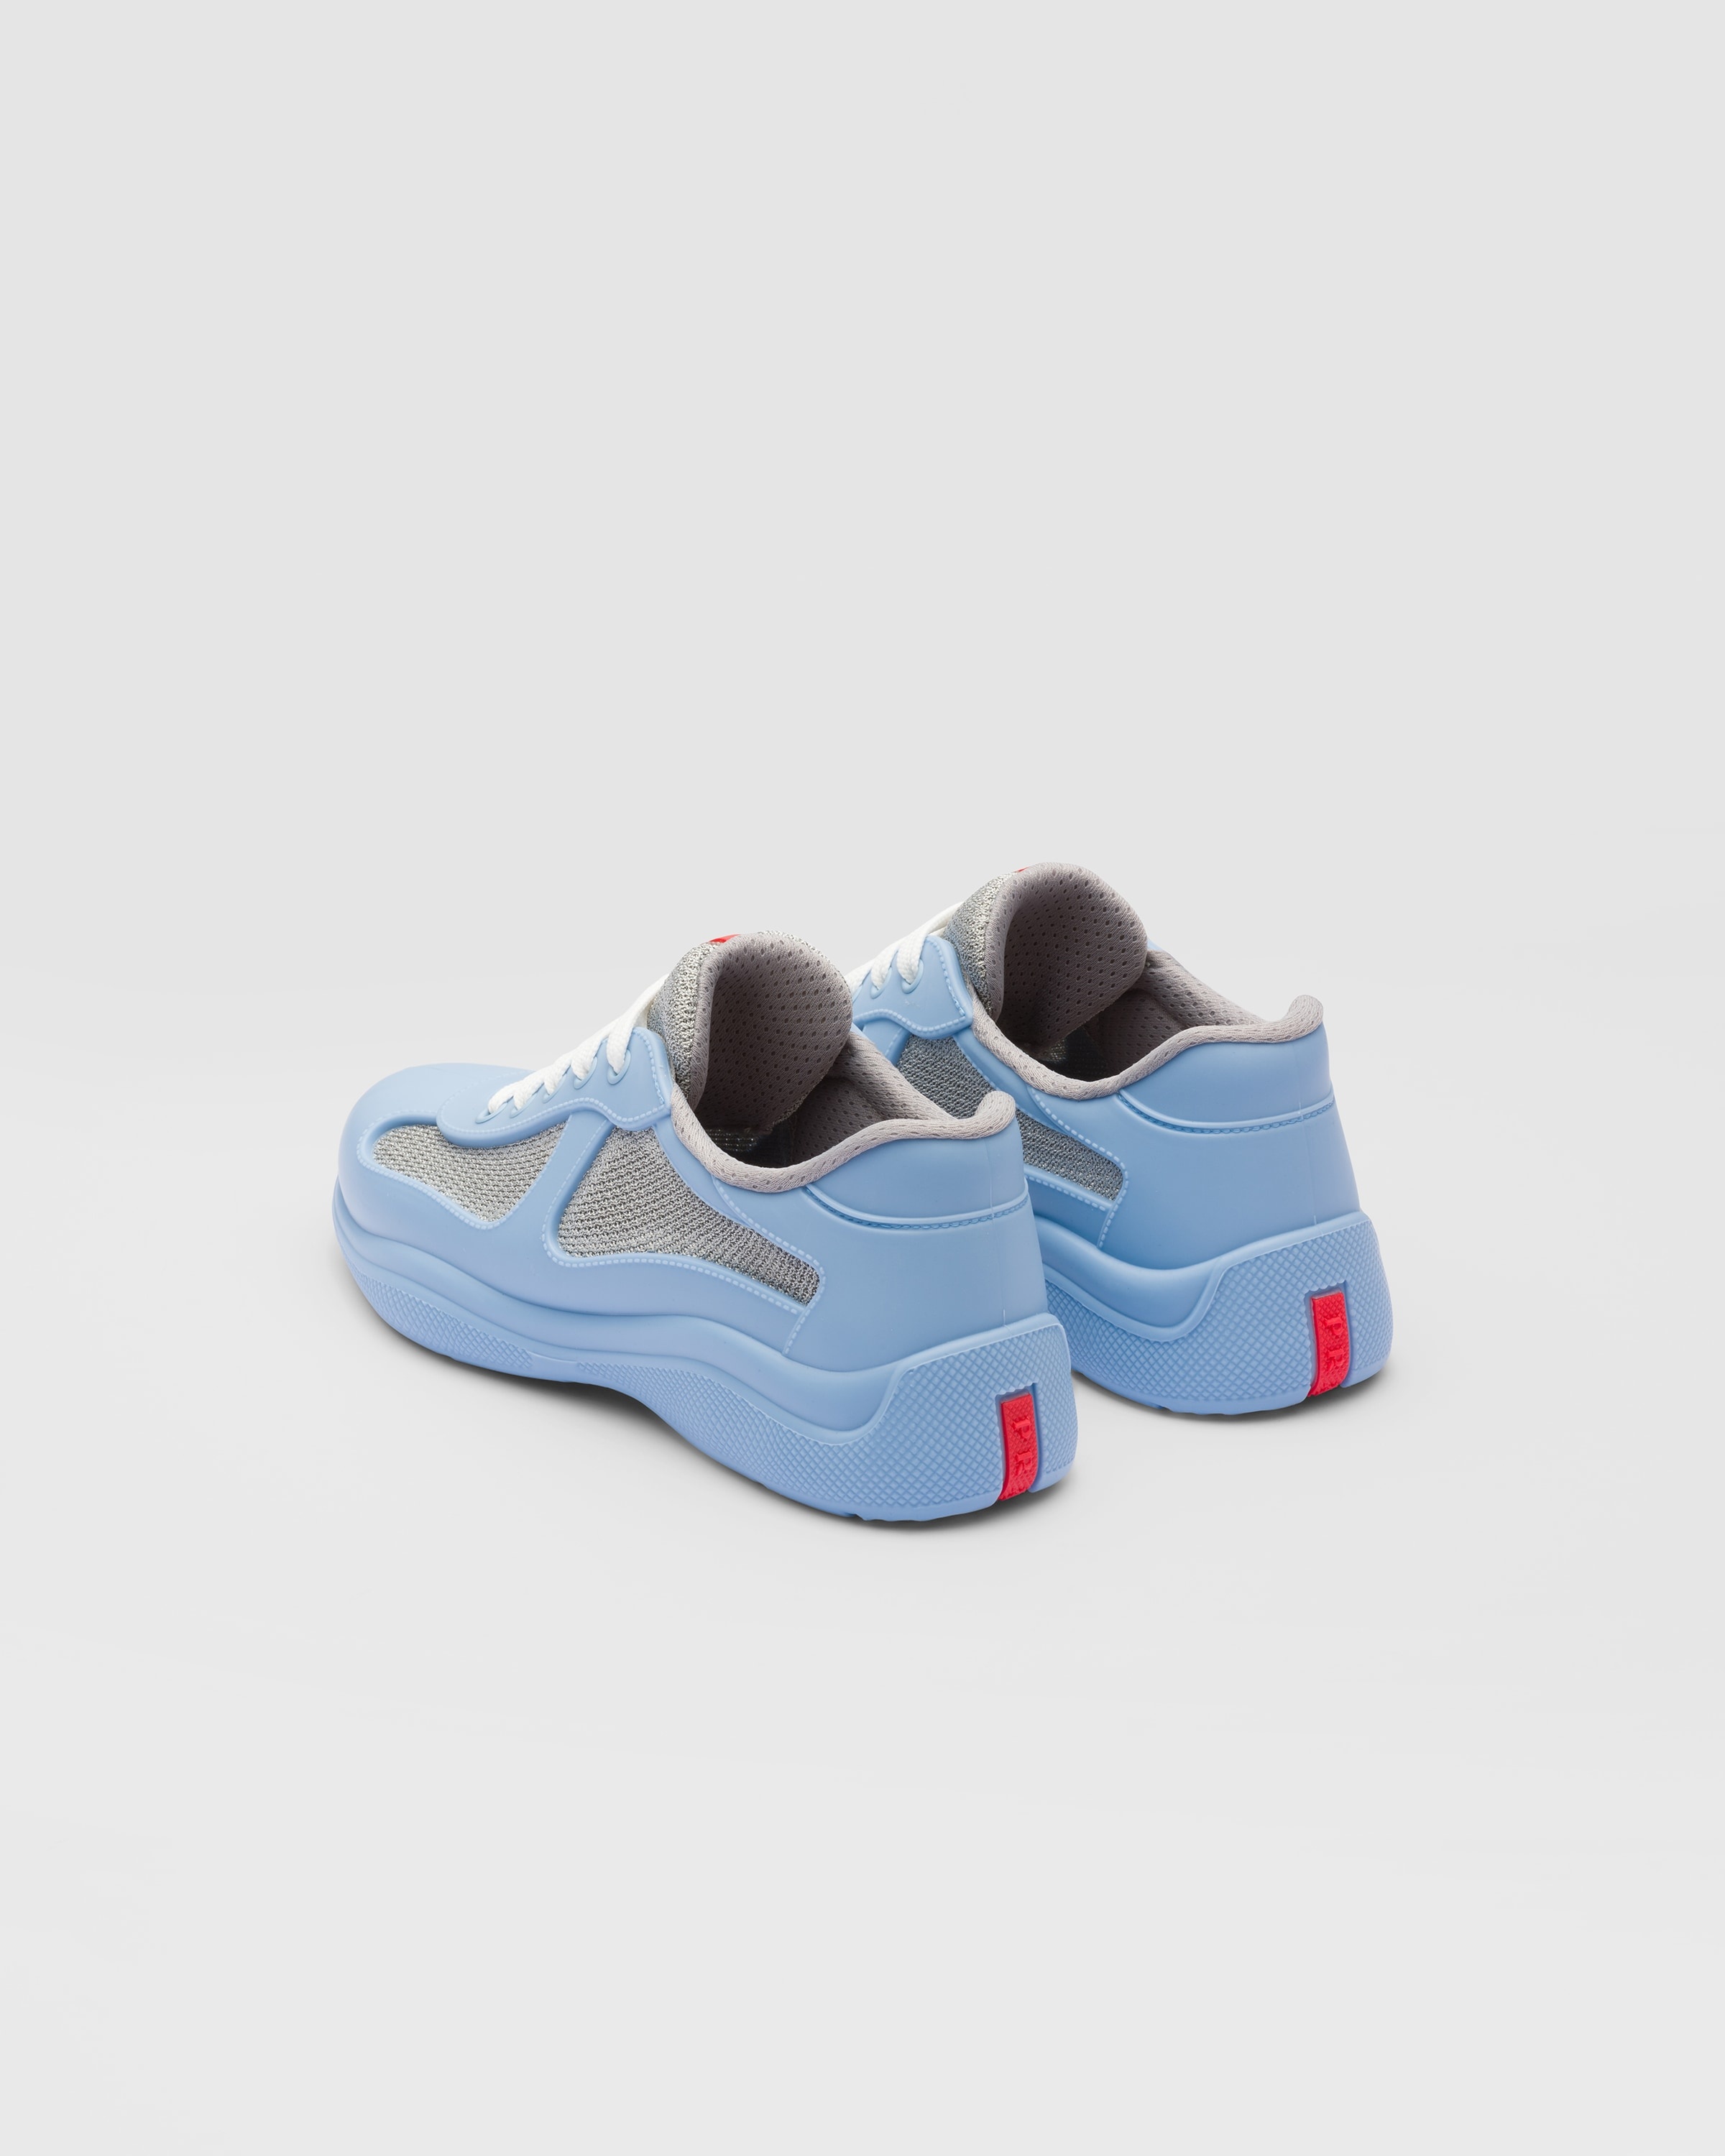 Prada America's Cup Soft rubber and bike fabric sneakers - 5